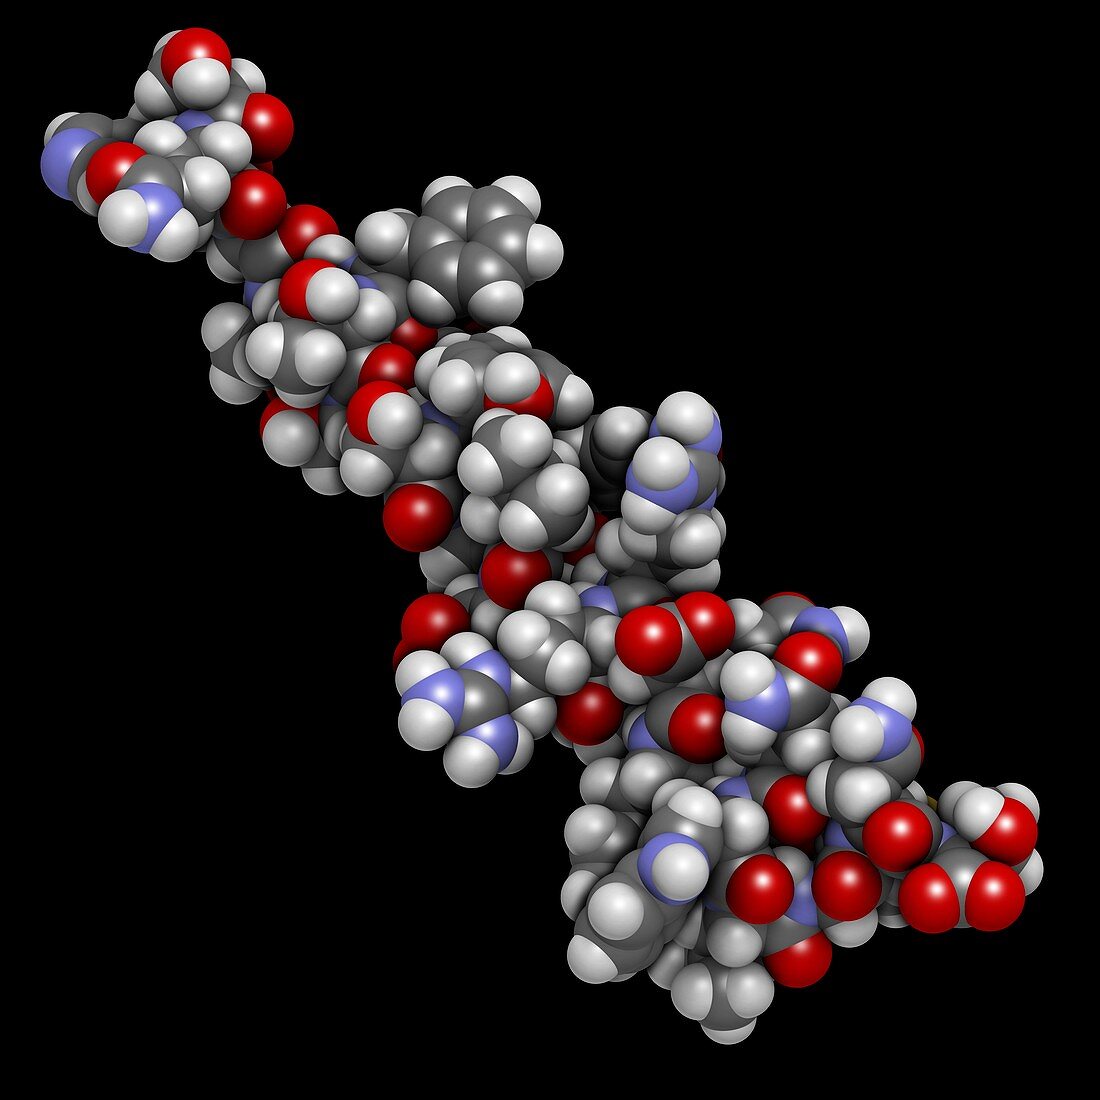 Glucagon hormone molecule, illustration